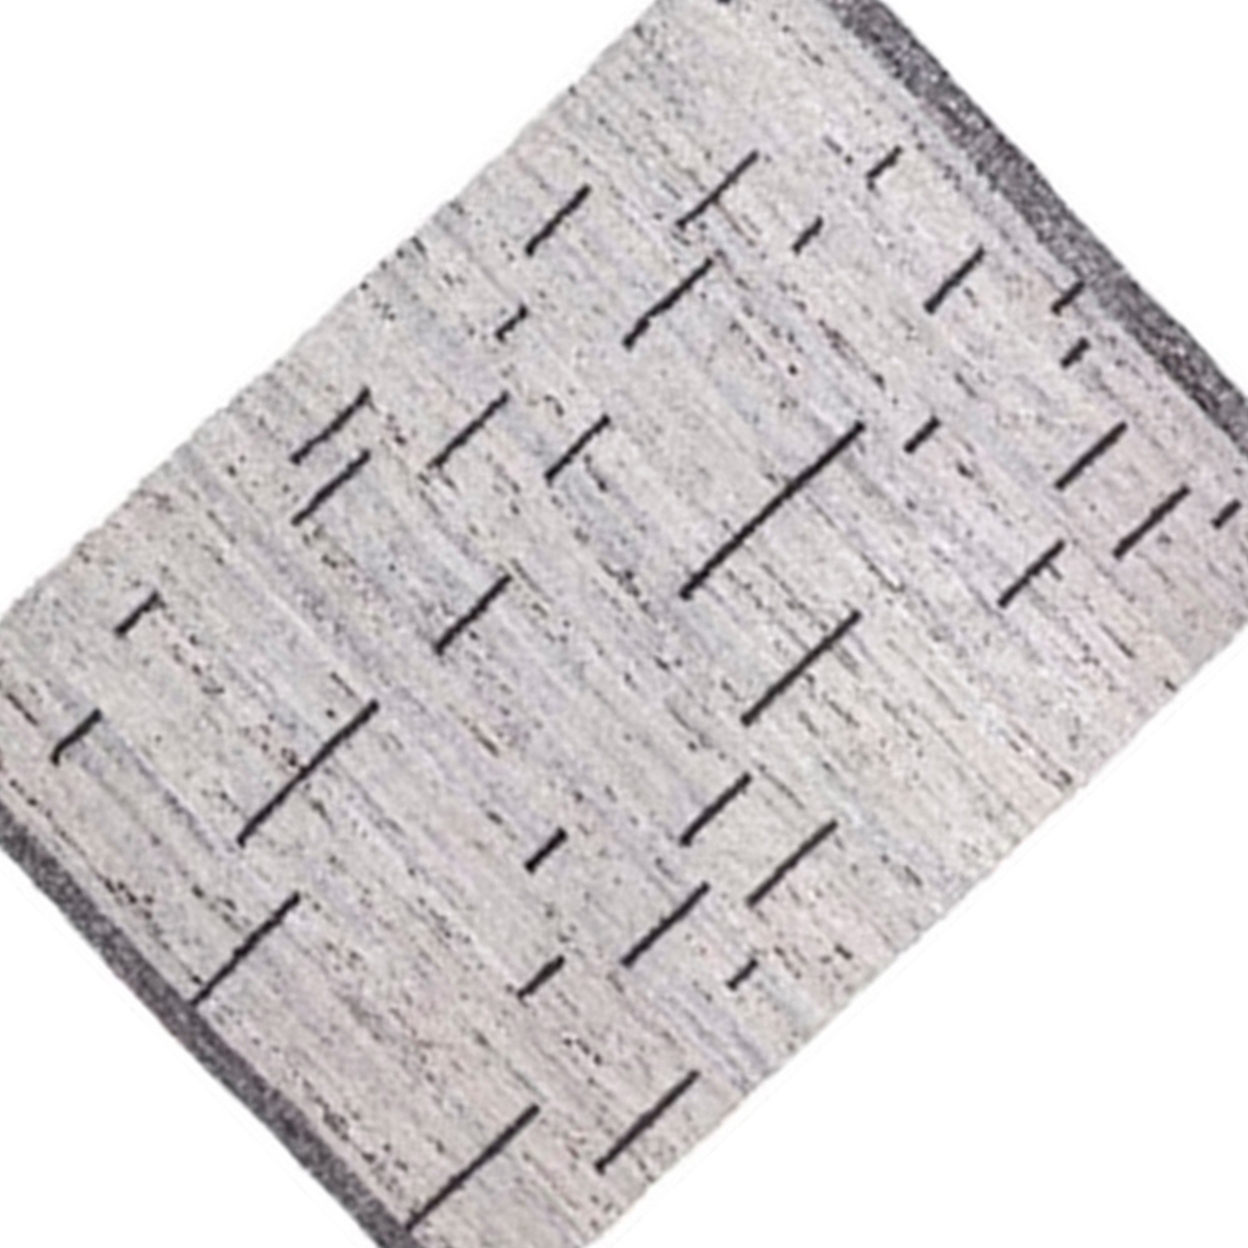 8 X 10 Modern Area Rug, Minimalist Line Pattern, Soft Fabric, Black, Cream- Saltoro Sherpi